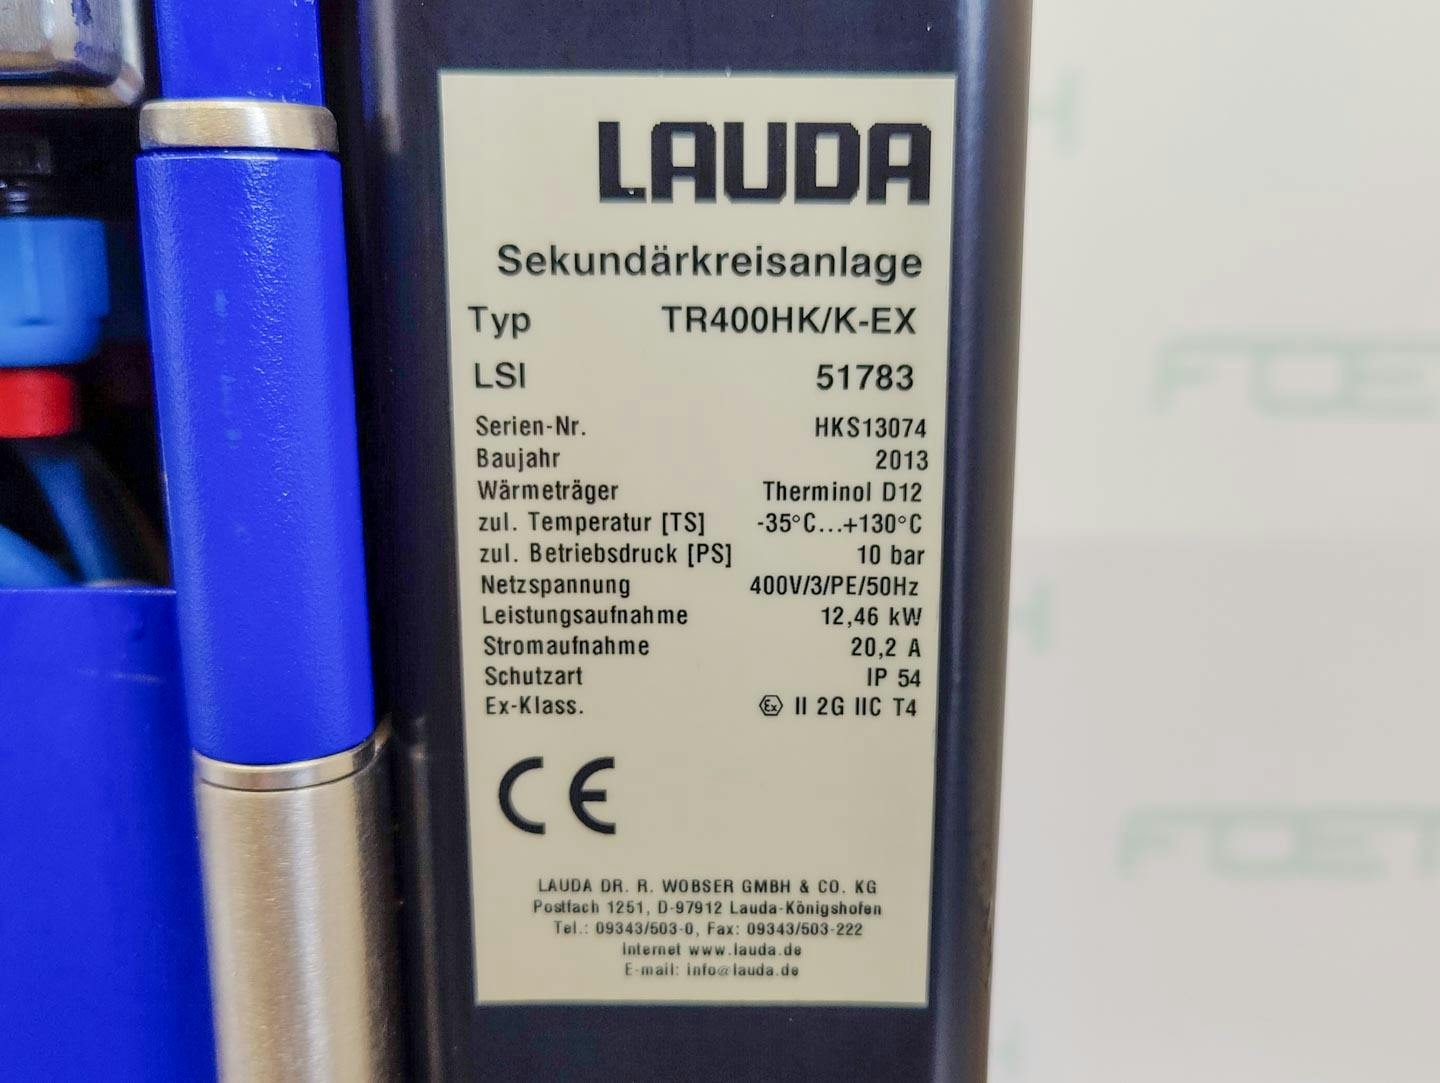 Lauda TR400 HK/KT-EX "secondary circuit system" - Atemperador - image 16